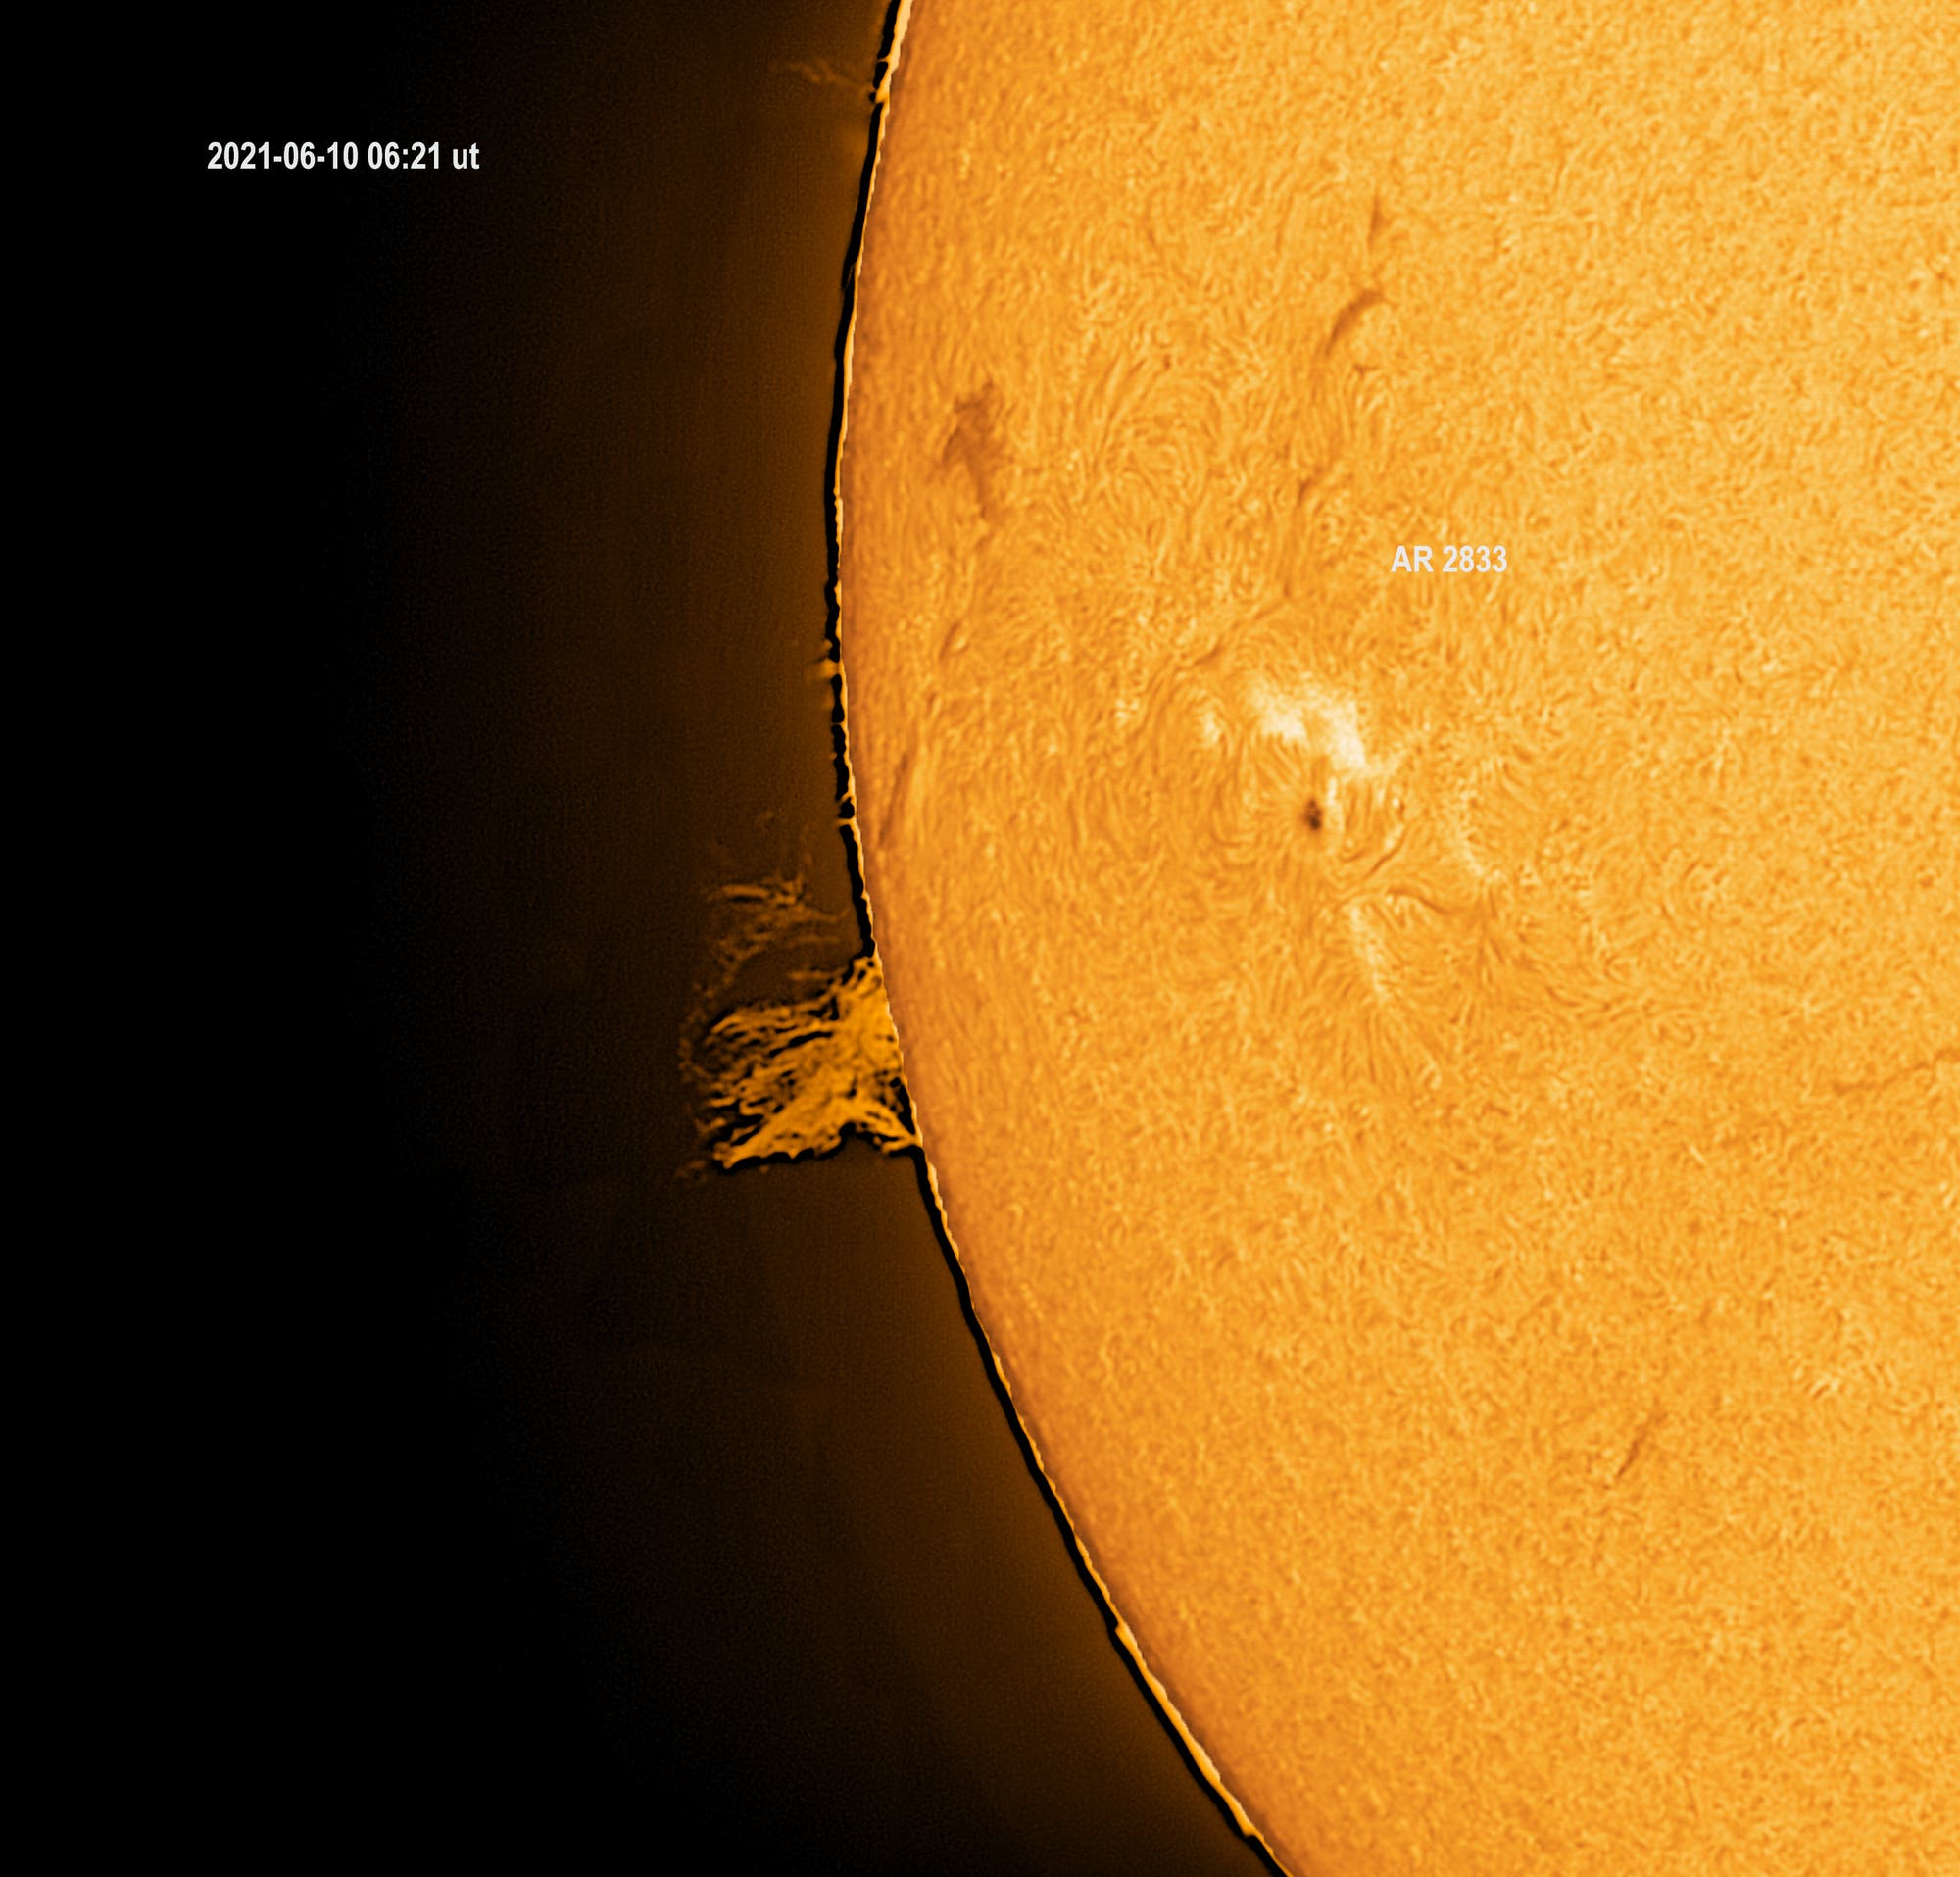 Sonnenprotuberanz und Filamente am 15. Juni 2021